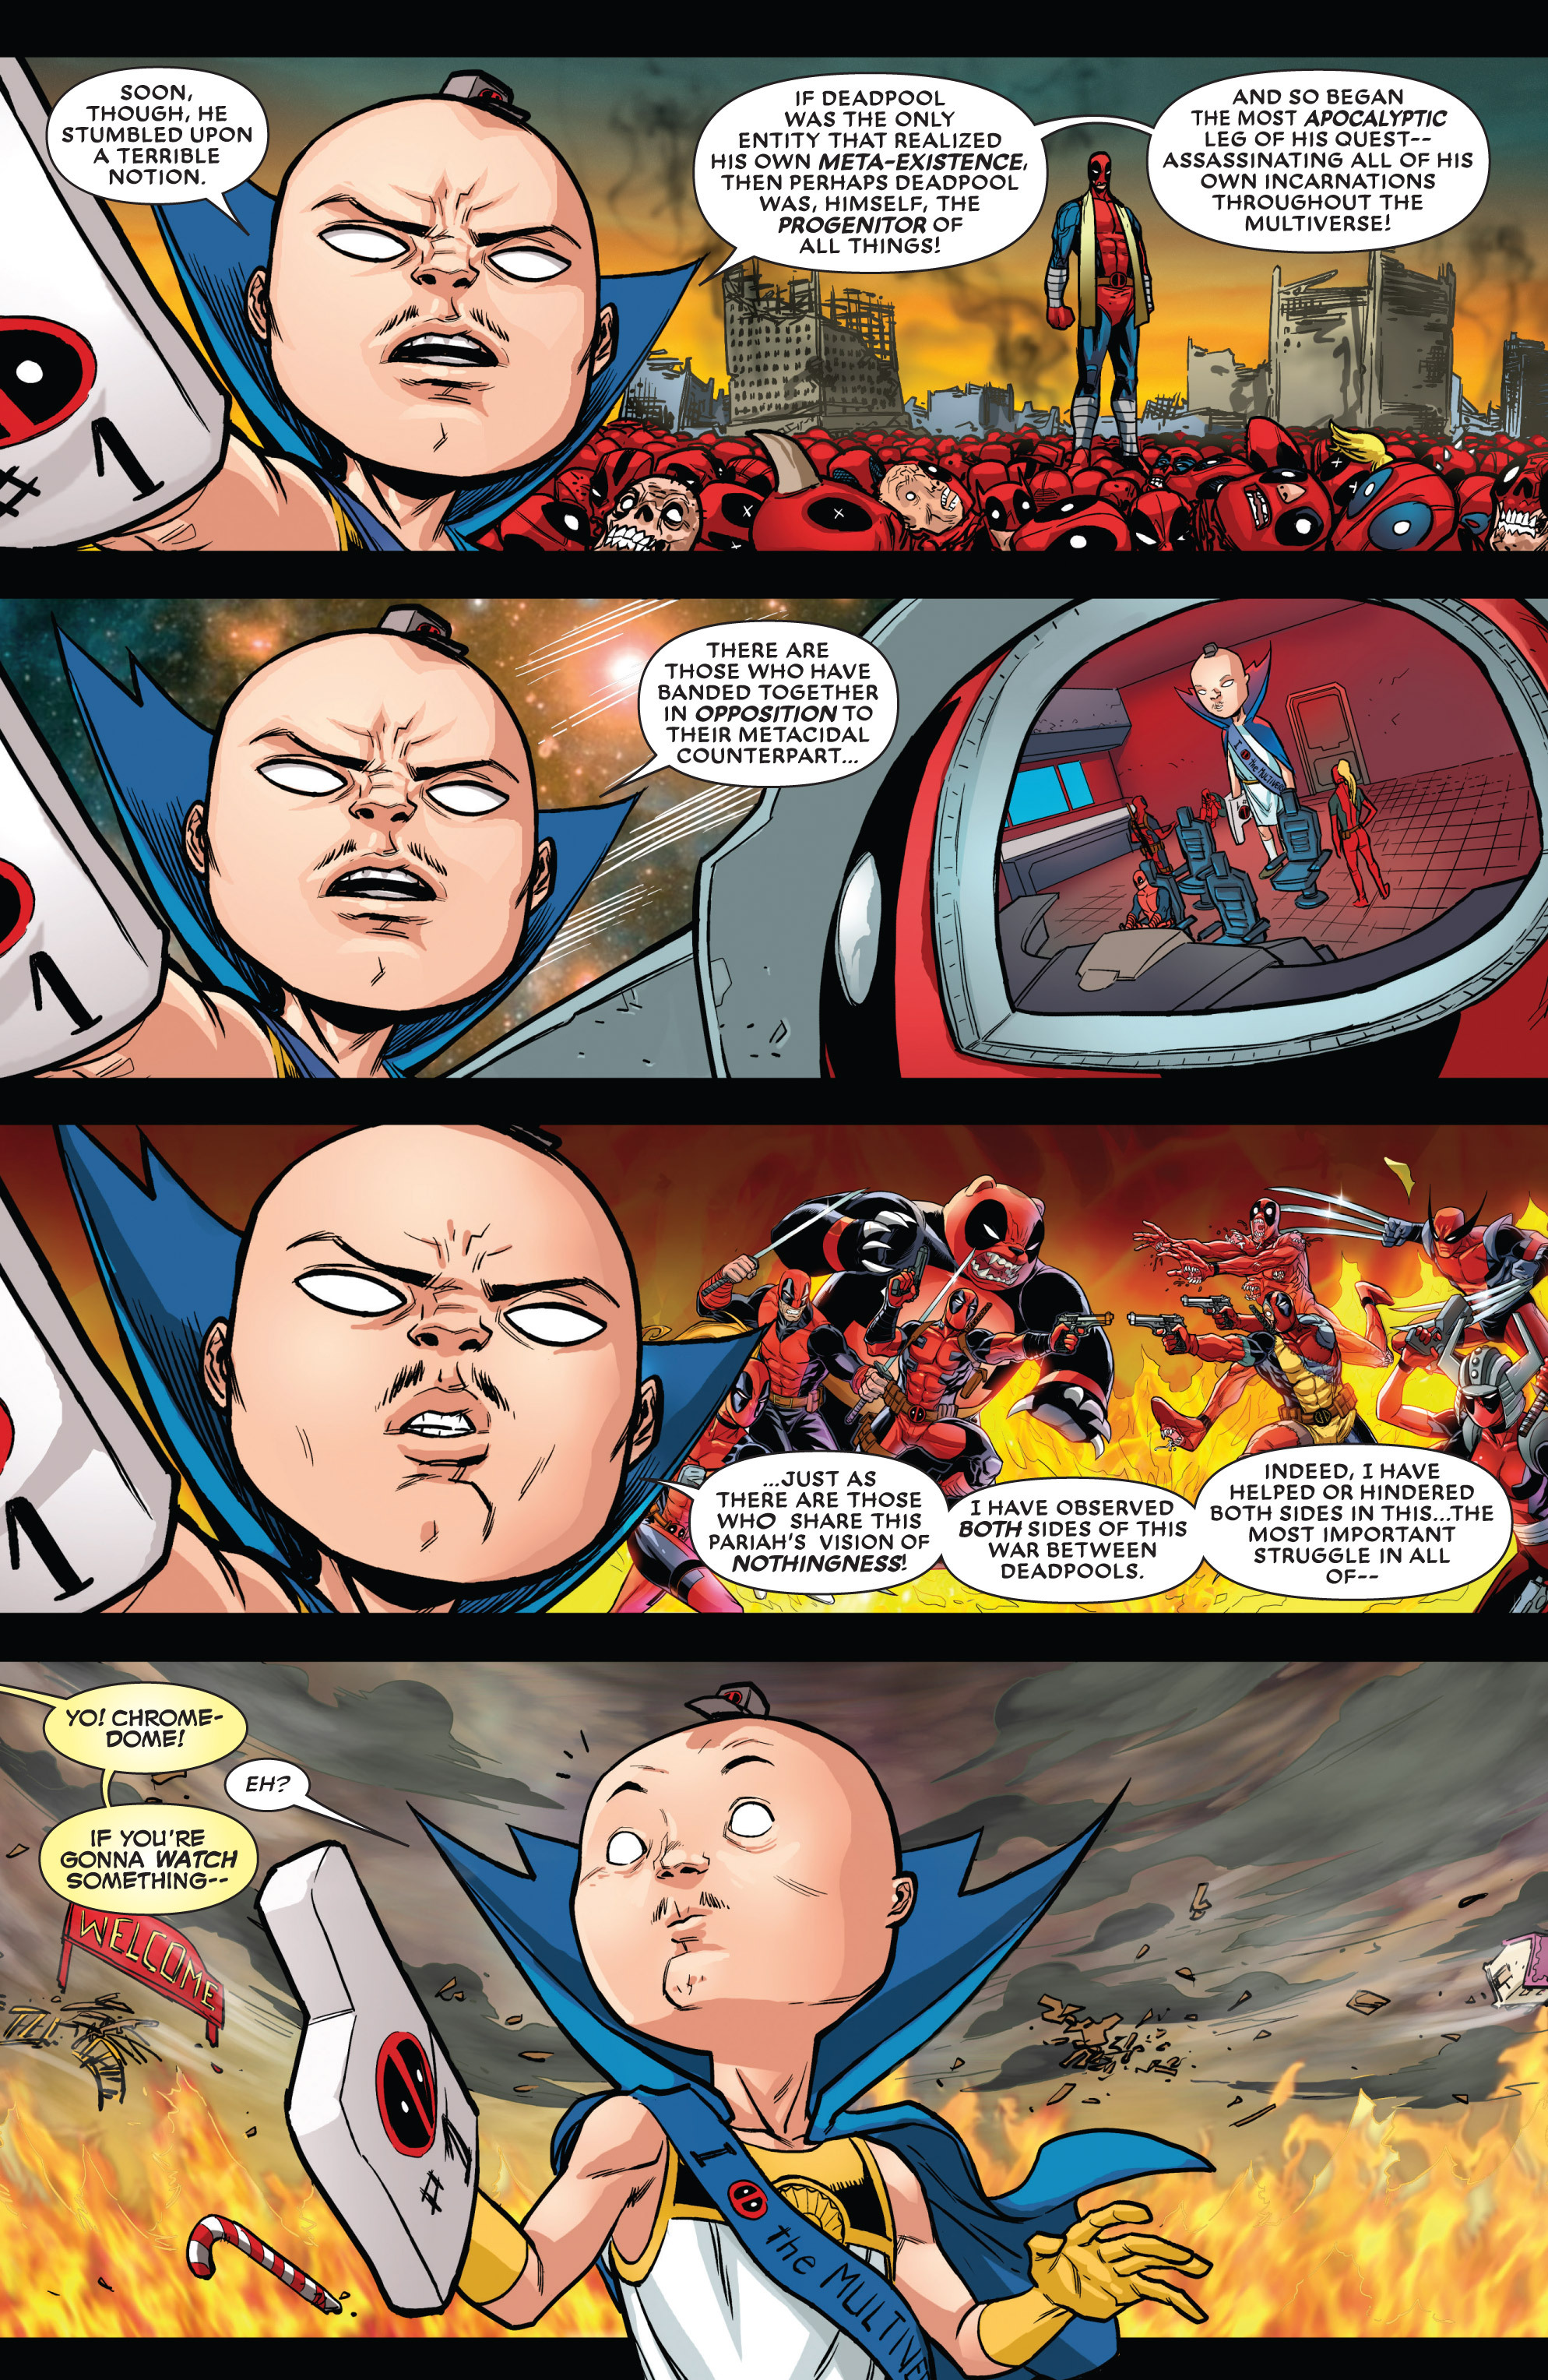 Deadpool Kills Deadpool Issue 3 Viewcomic Reading Comics